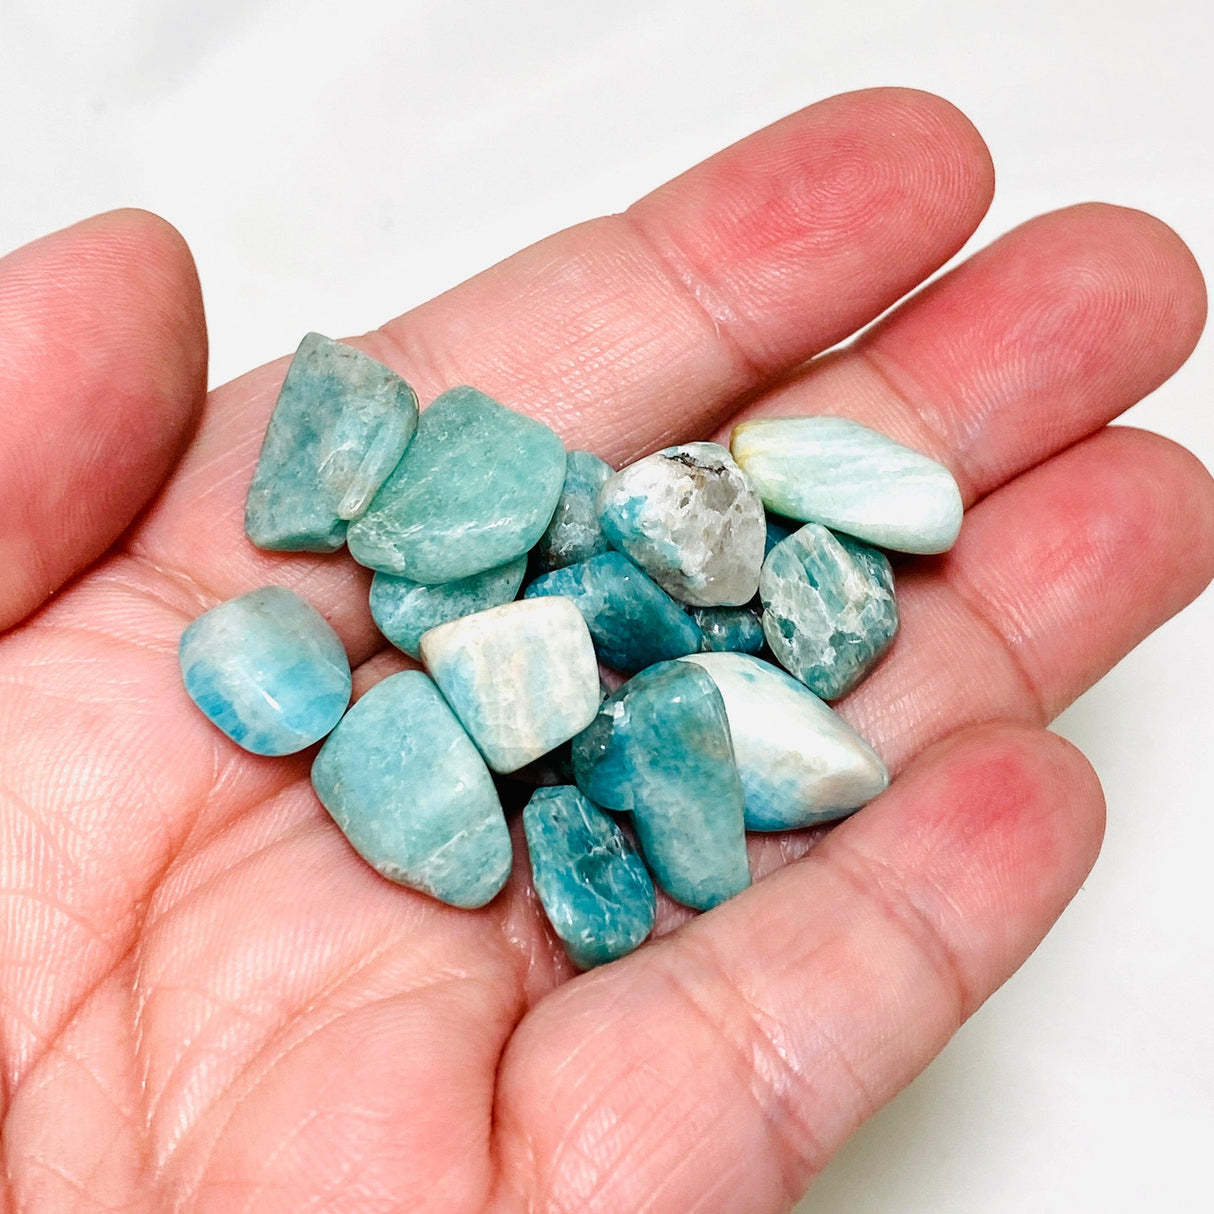 Mini Tumbled Stones (Chips) 50g - Amazonite - Nature's Magick